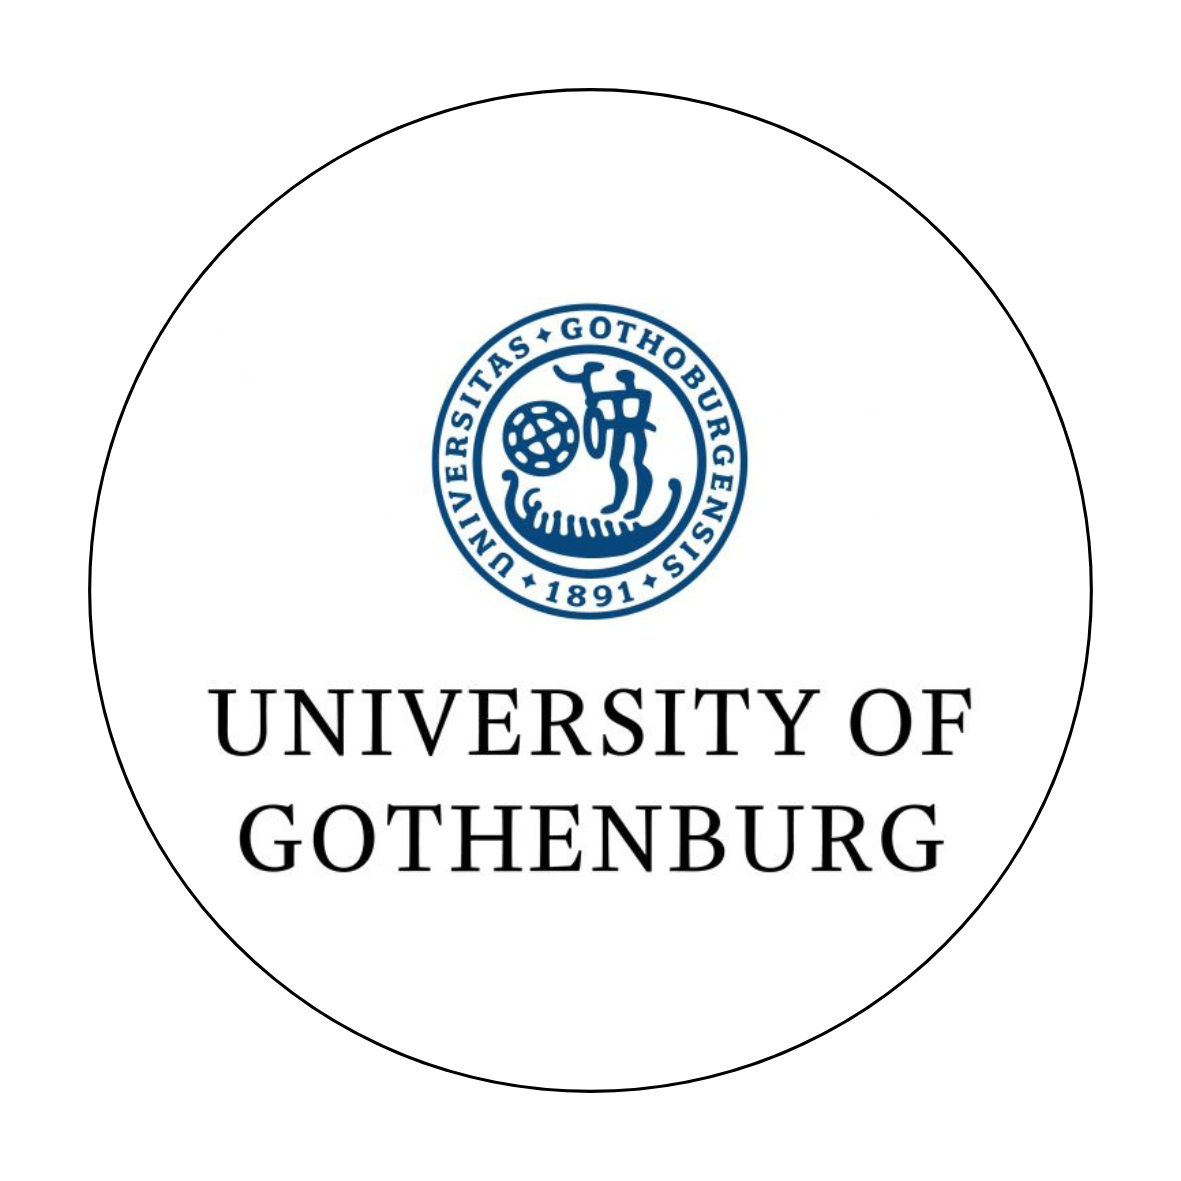 Gothenburg University client of Playerence Logo